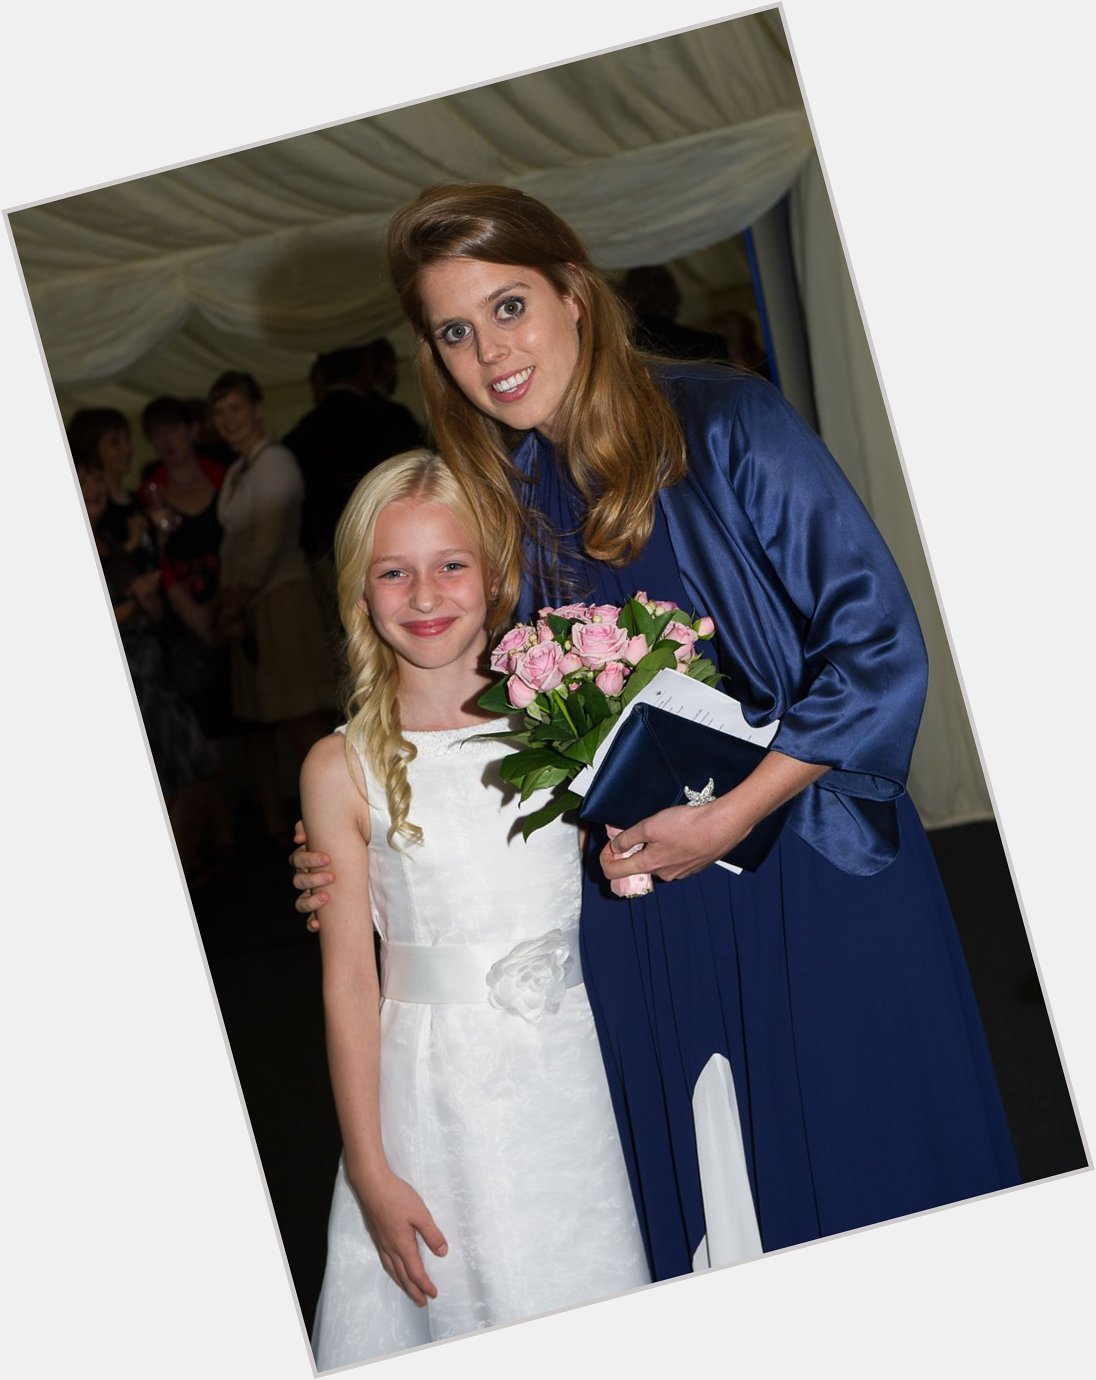 Happy birthday to our Royal Patron HRH Princess Beatrice! 